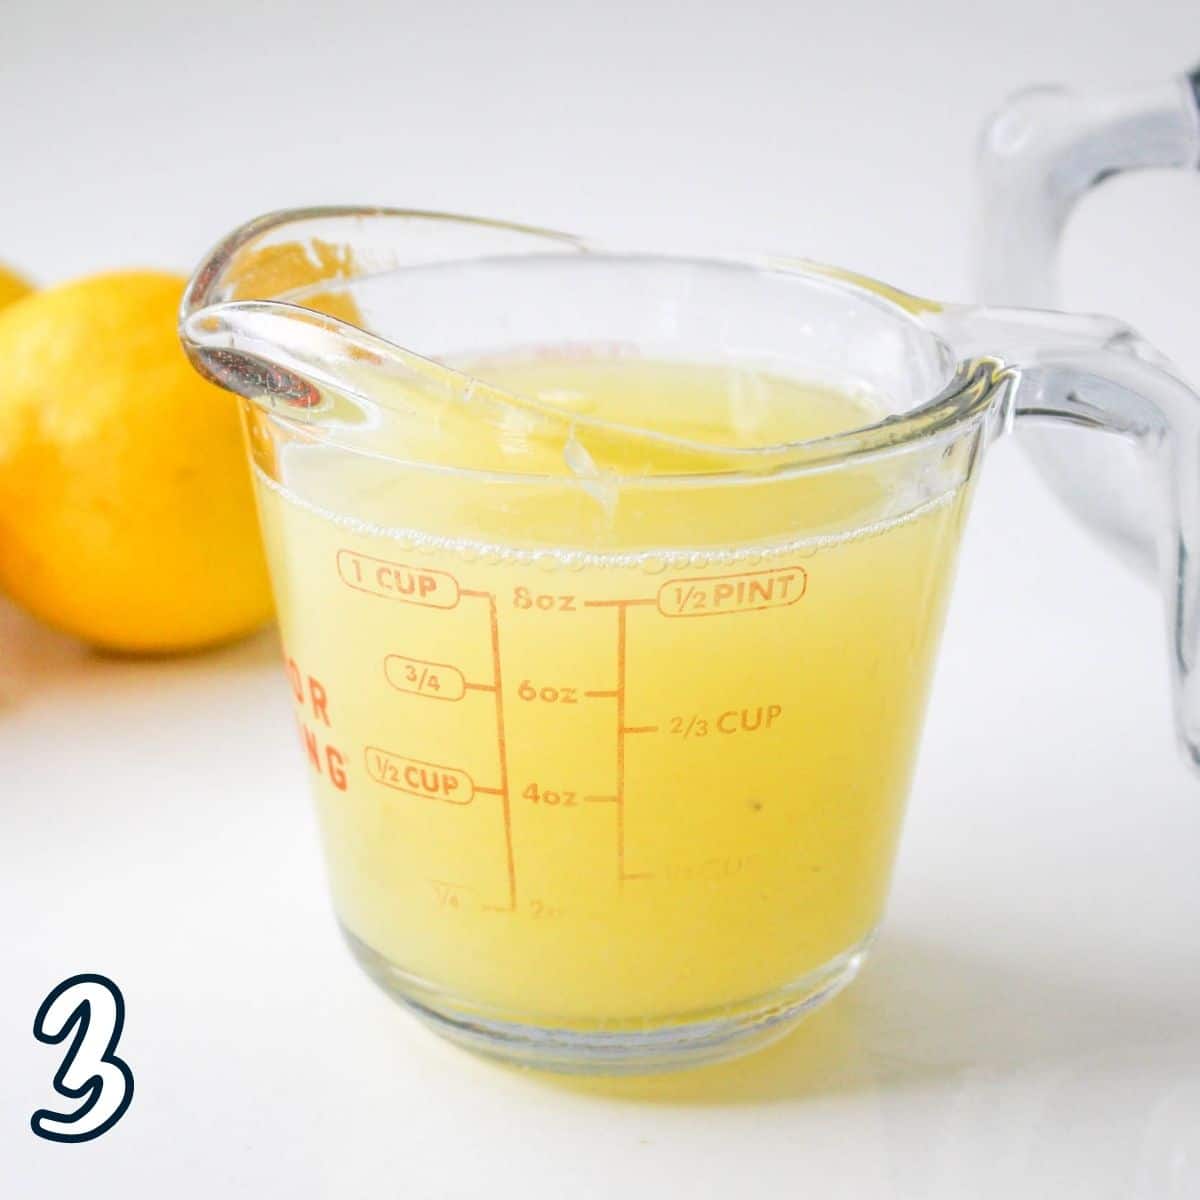 2 cups of fresh squeezed lemon juice. 